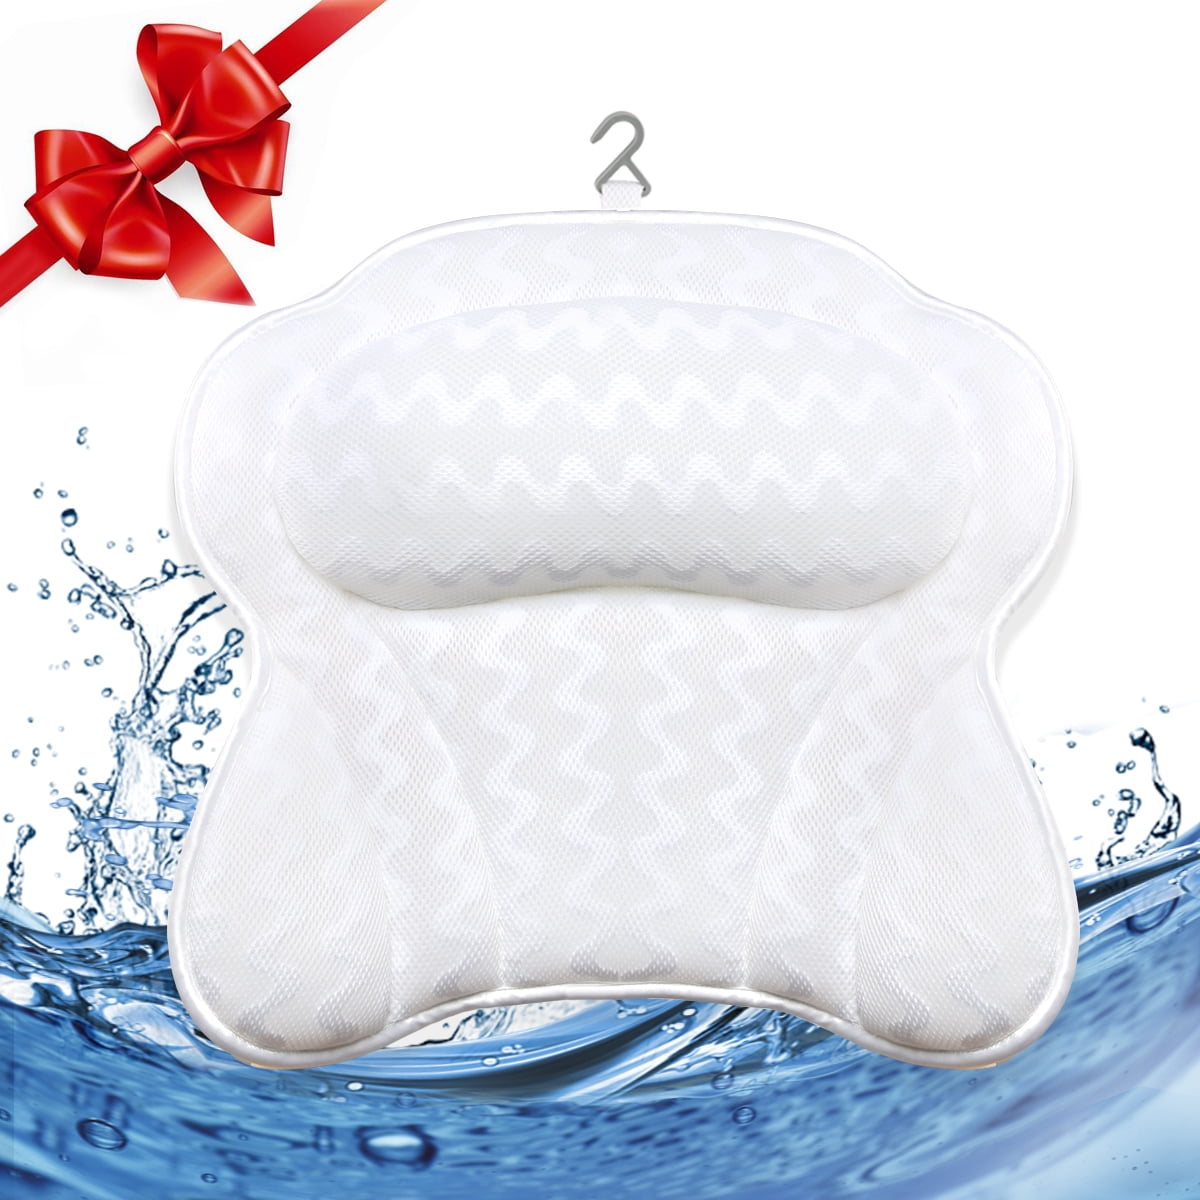 Luxury Spa Cushion Bath Pillow Mat Bathtub Non-Slip Comfort Support Full Body US 